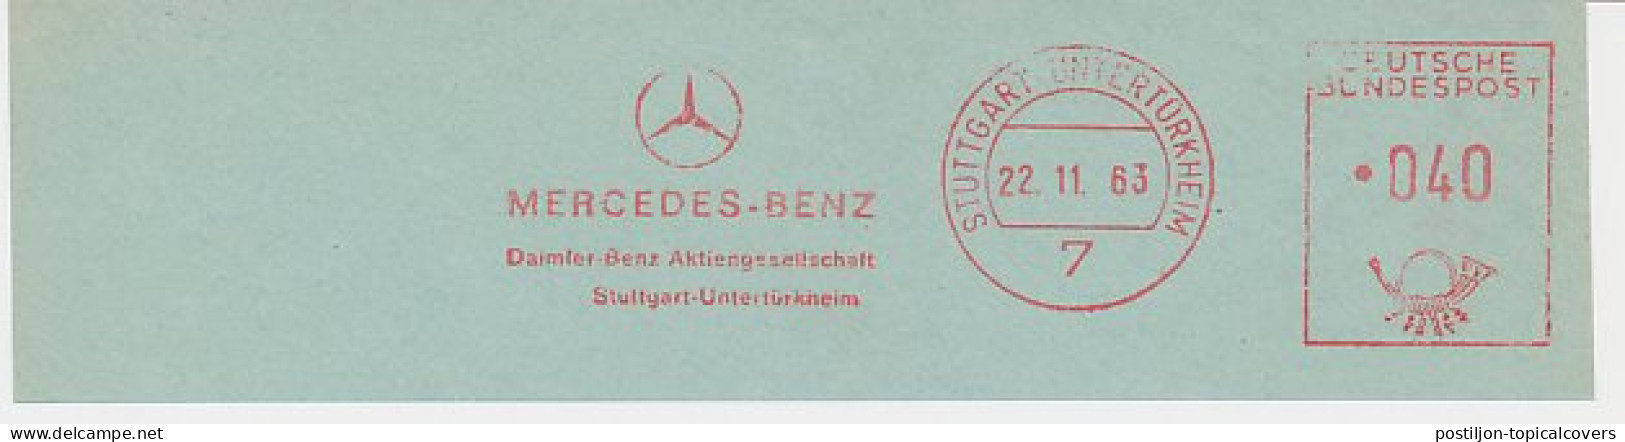 Meter Cut Germany 1963 Car - Mercedes Benz - Voitures